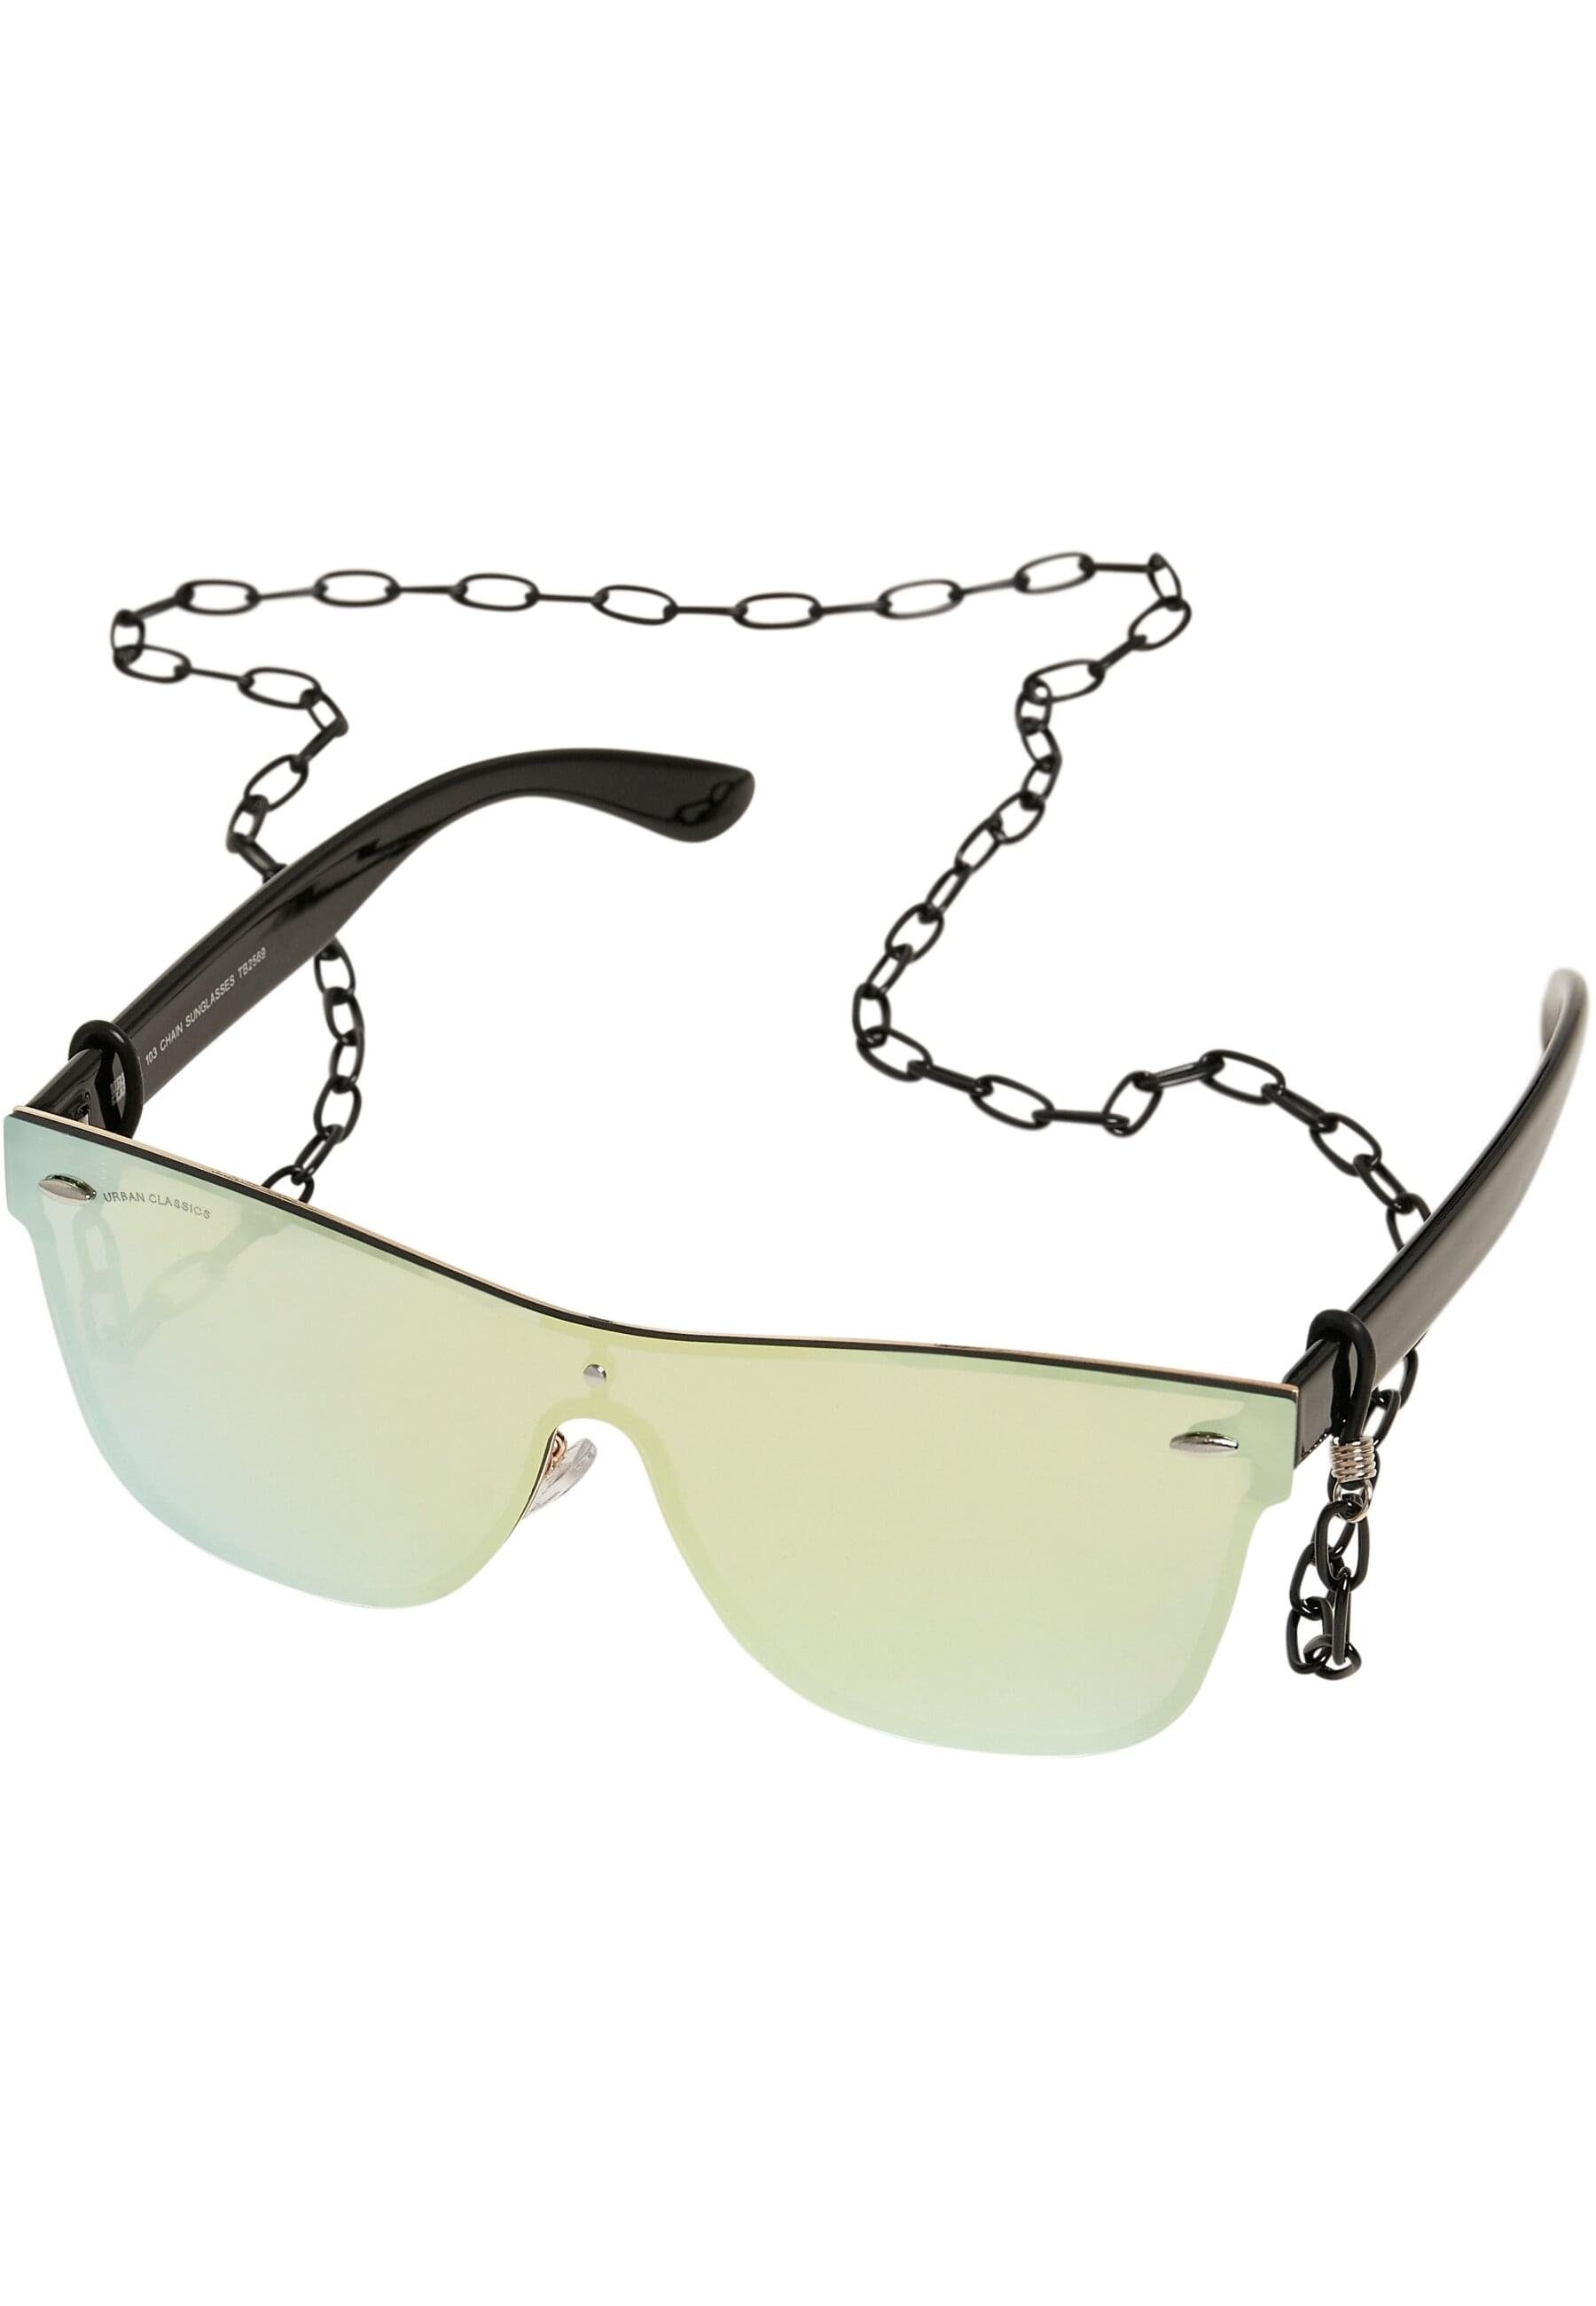 Unisex CLASSICS 103 Sonnenbrille URBAN mirror black/gold Chain Sunglasses